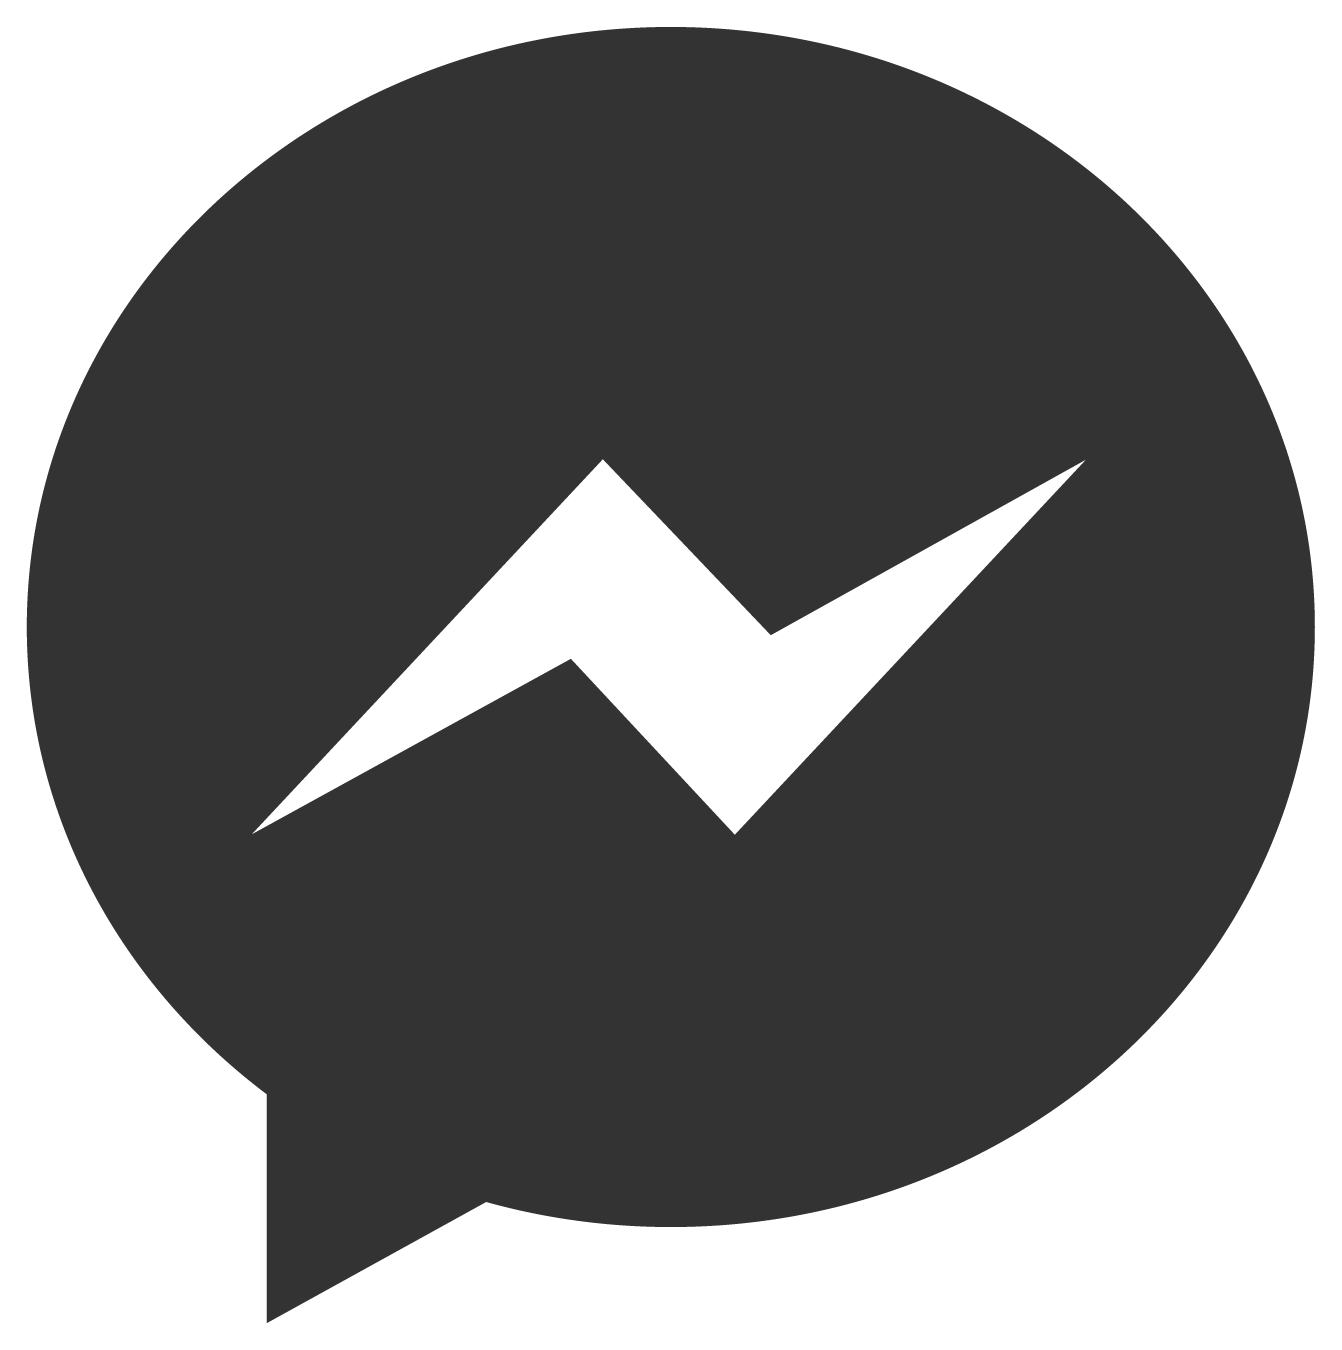 Messenger Logo - Black Facebook Messenger Logo #44115 - Free Icons and PNG Backgrounds